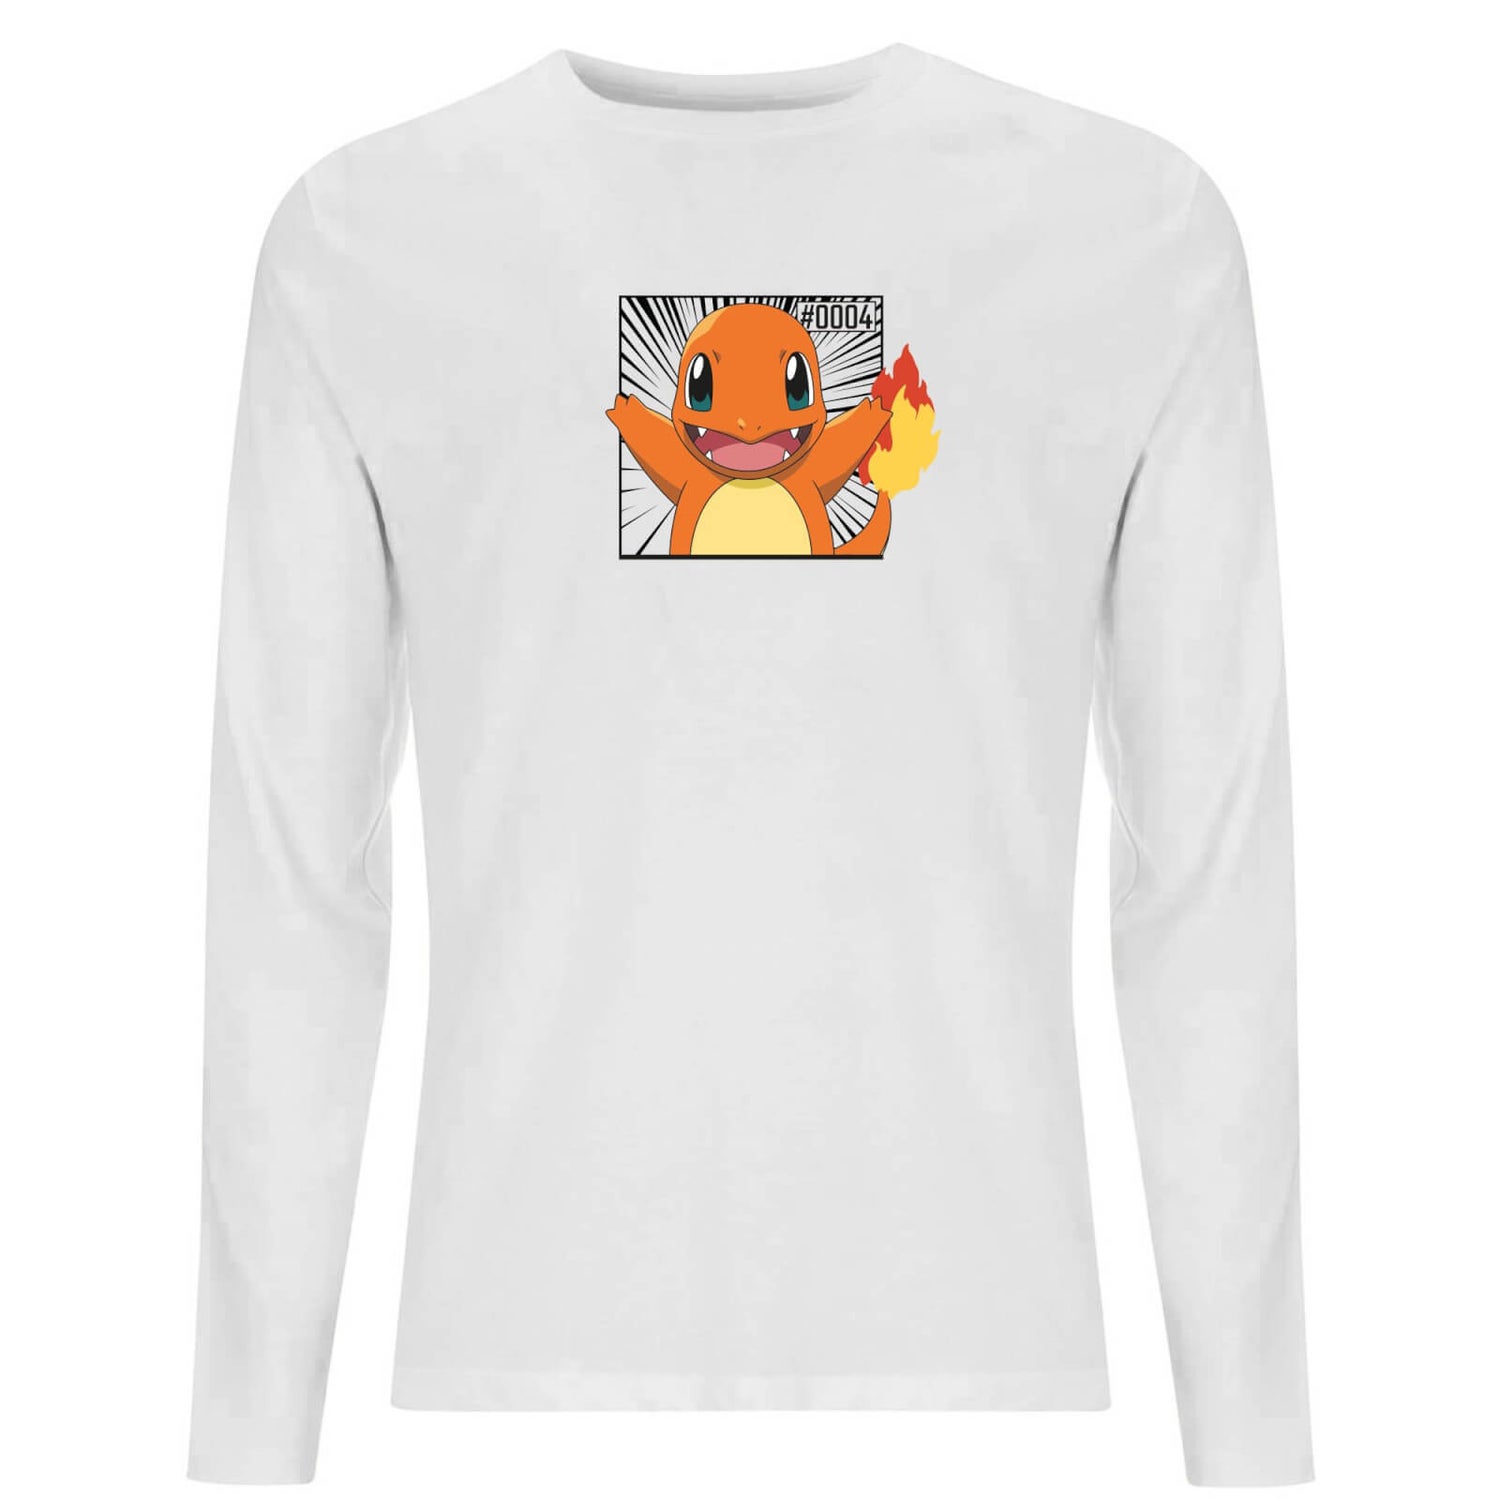 Pokémon Pokédex Charmander #0004 Men's Long Sleeve T-Shirt - White